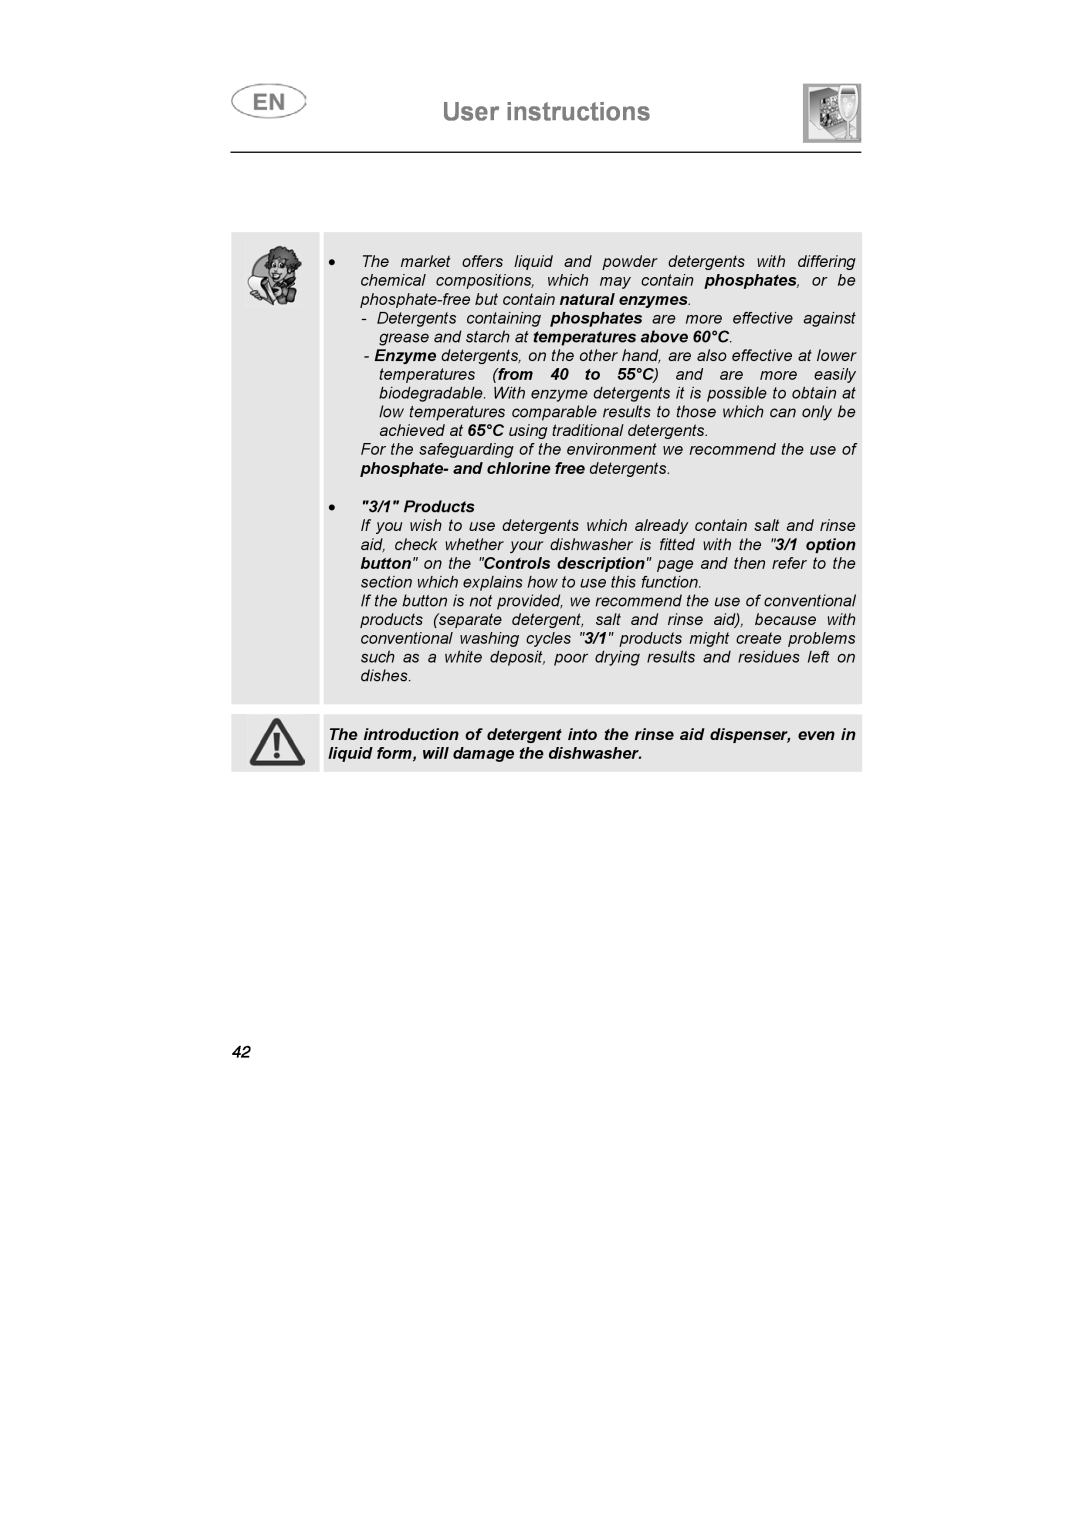 Smeg LSA6051B instruction manual 3/1 Products, User instructions 